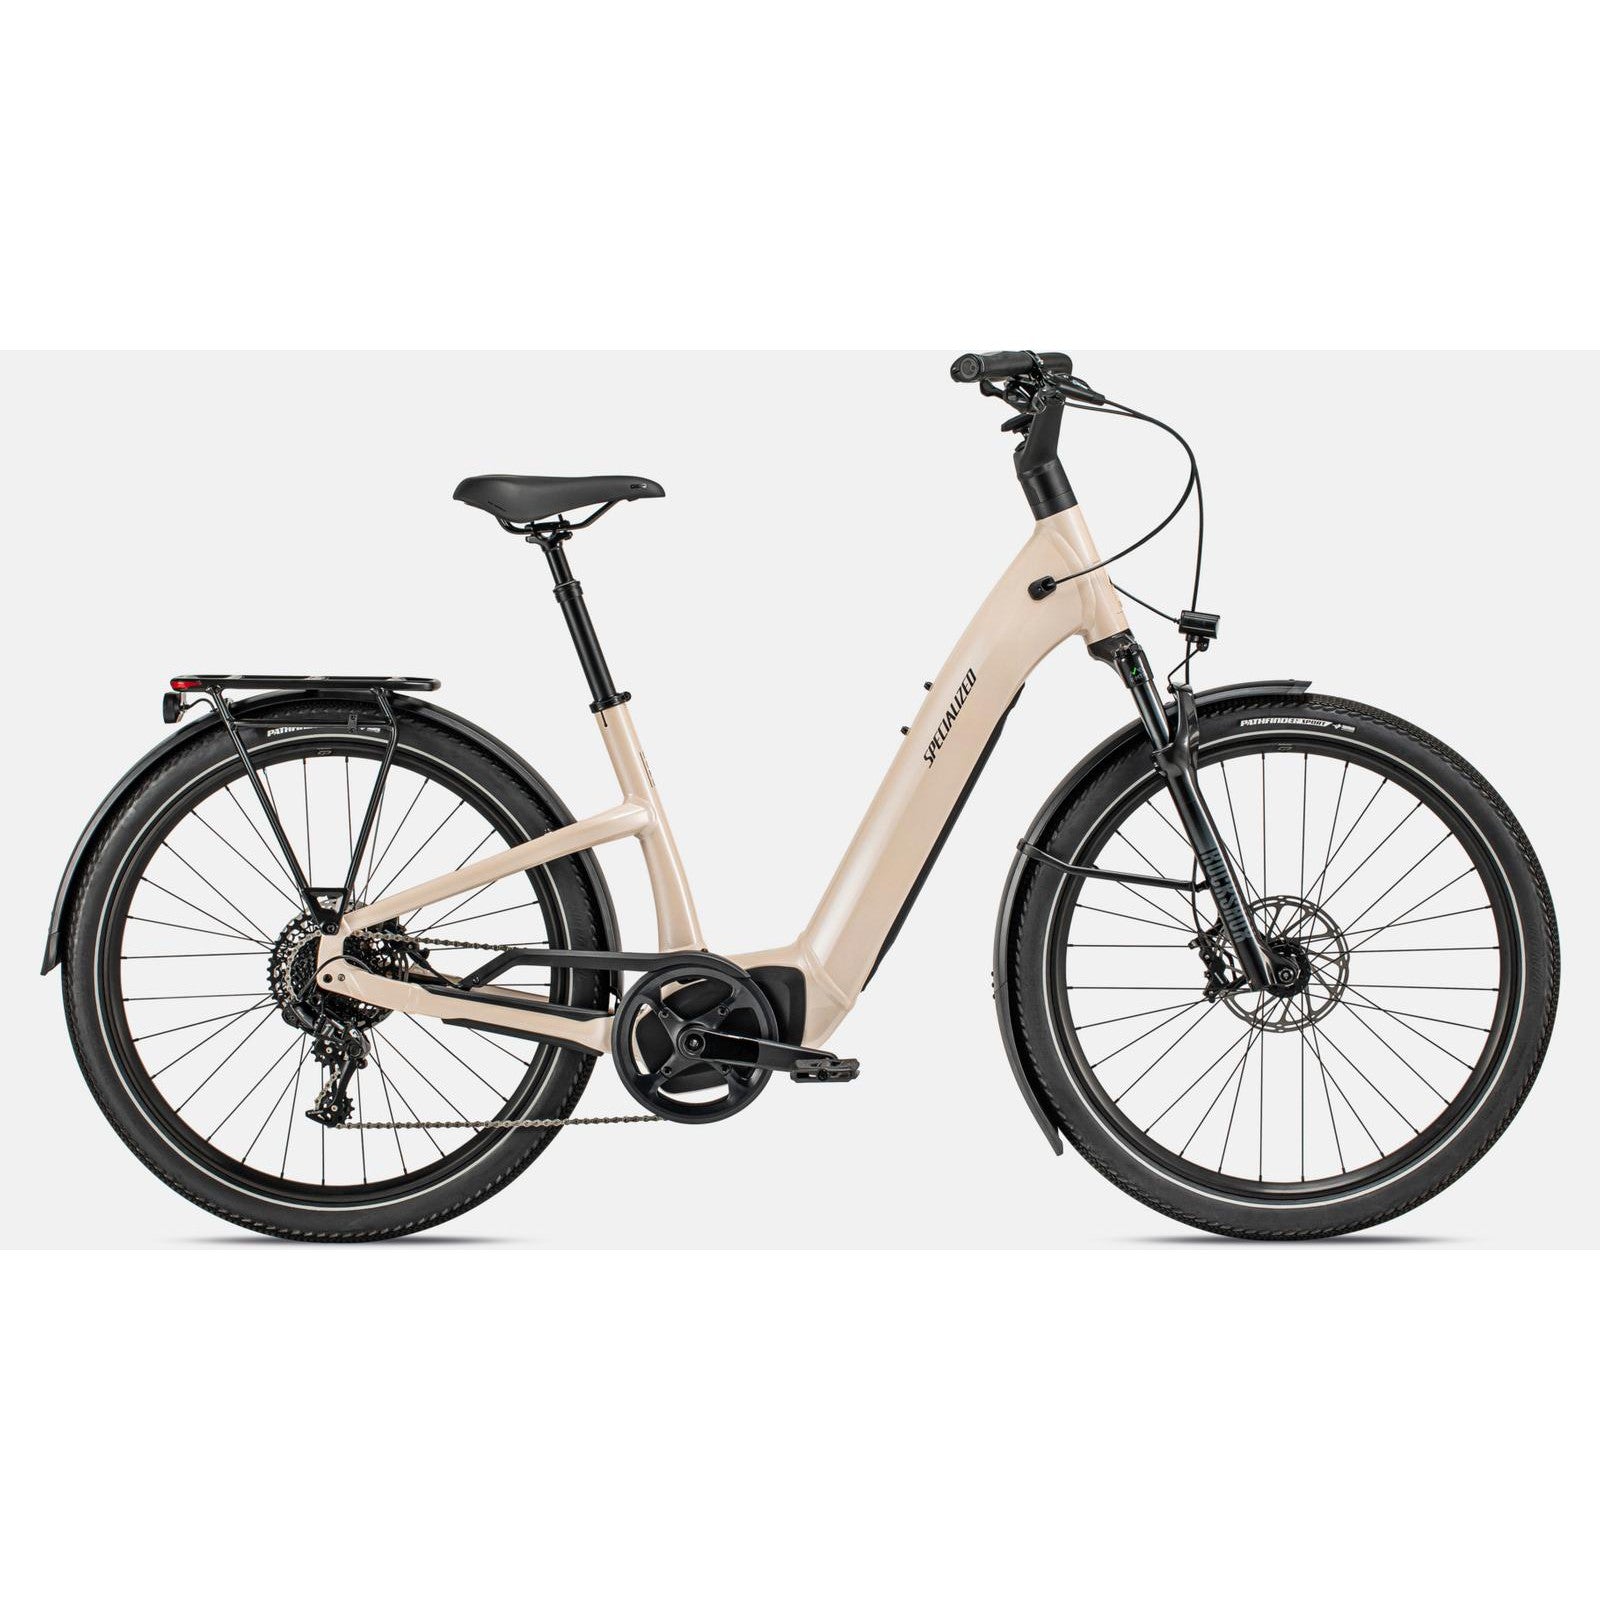 Specialized Turbo Como 5.0 Electric Bike - Bikes - Bicycle Warehouse